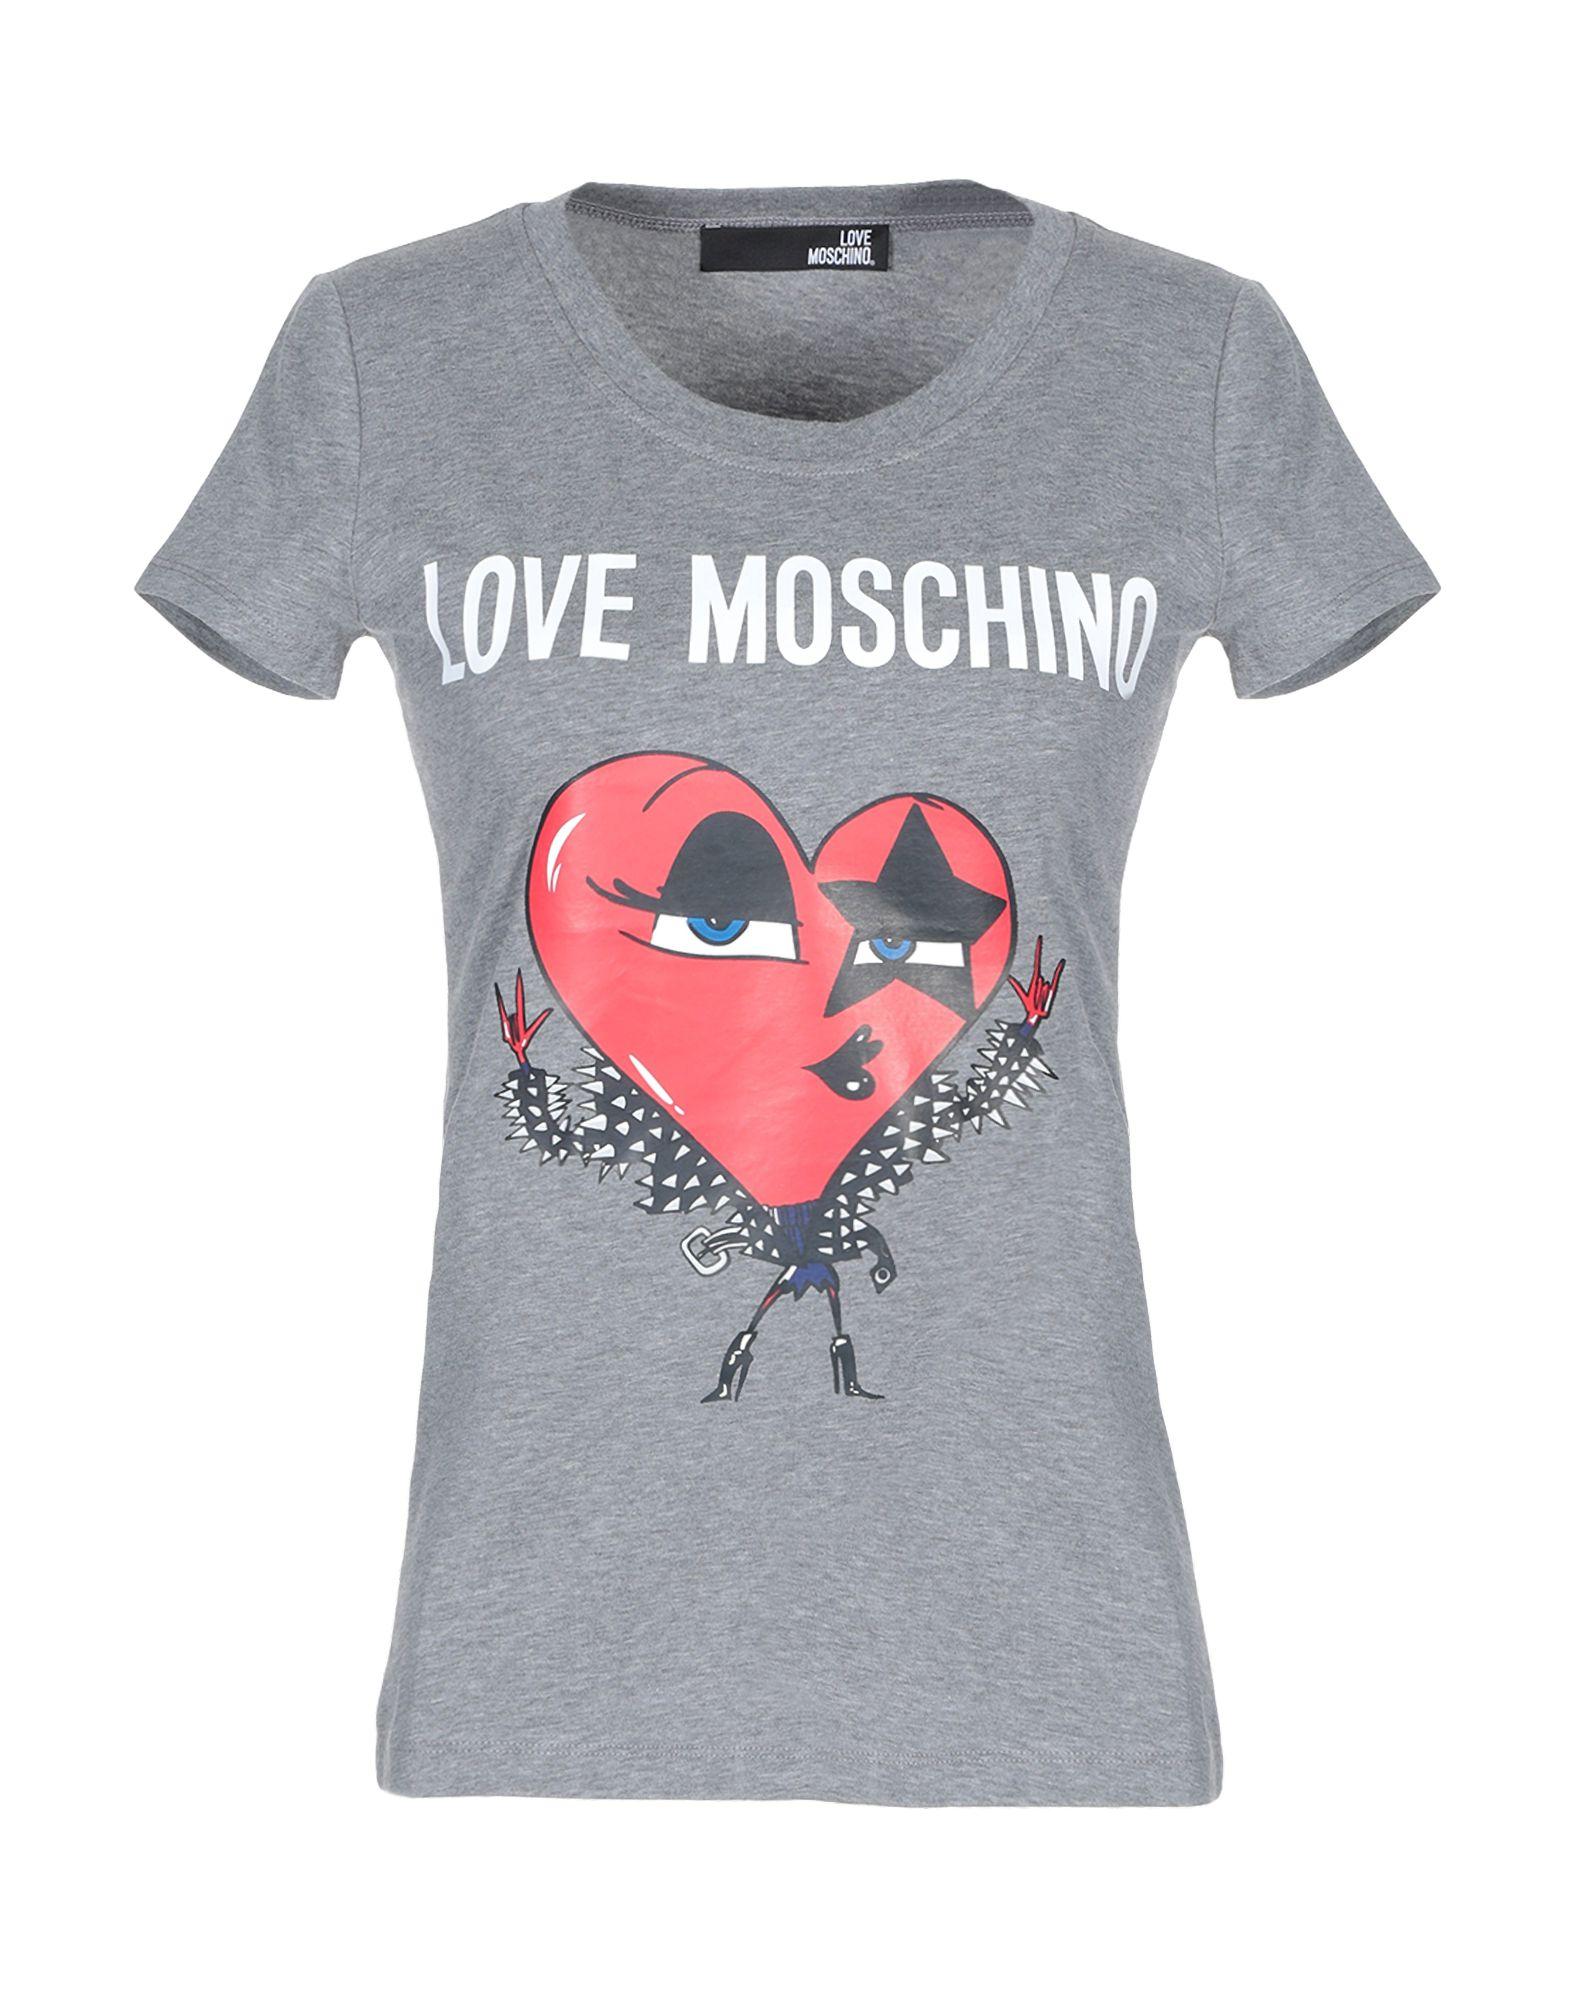 Love Moschino T-shirt in Grey (Gray) - Lyst